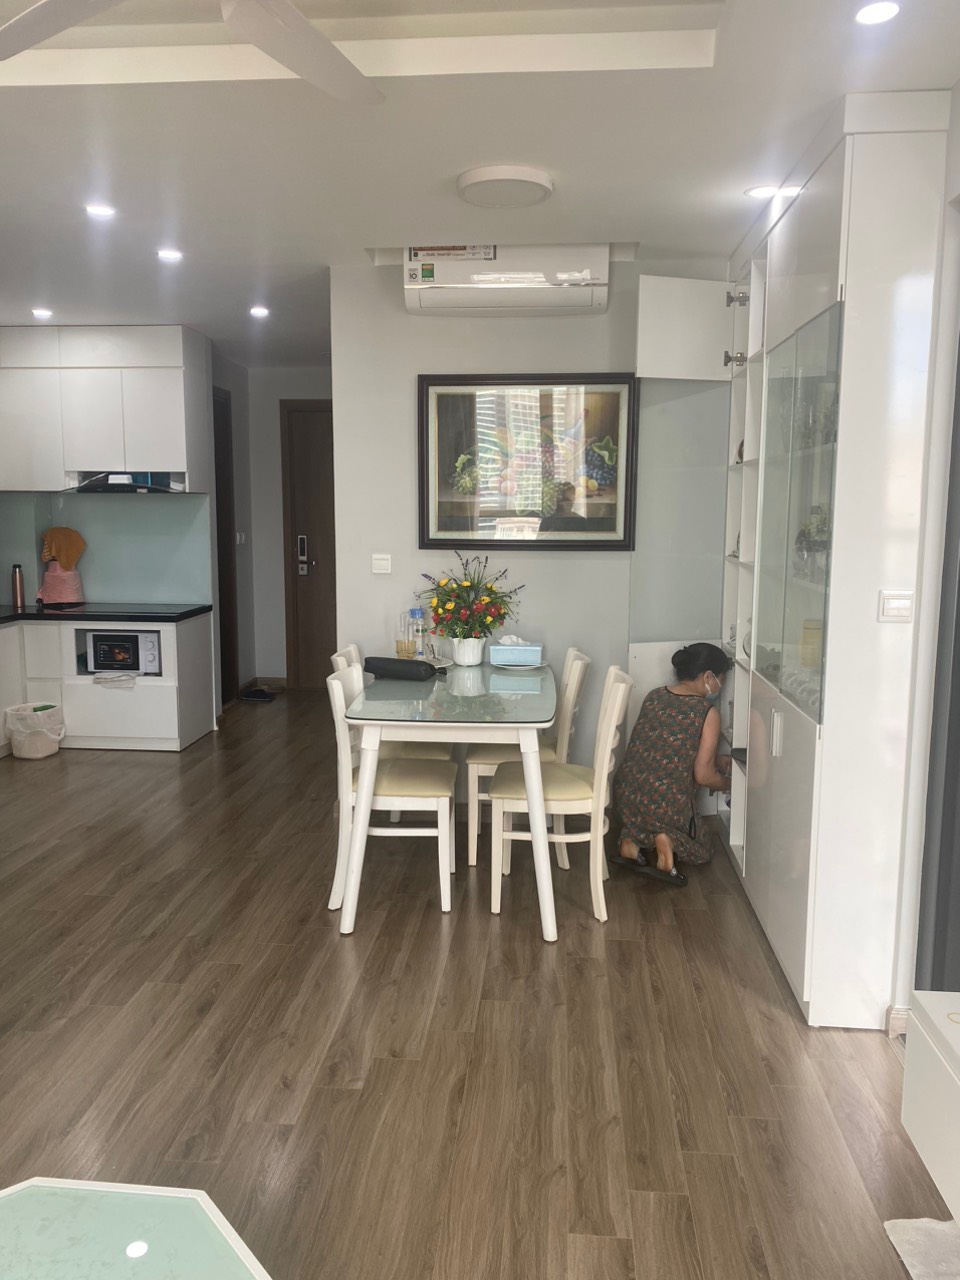 Hud Building Nha Trang apartment for rent| 2 bedroom | 13 million